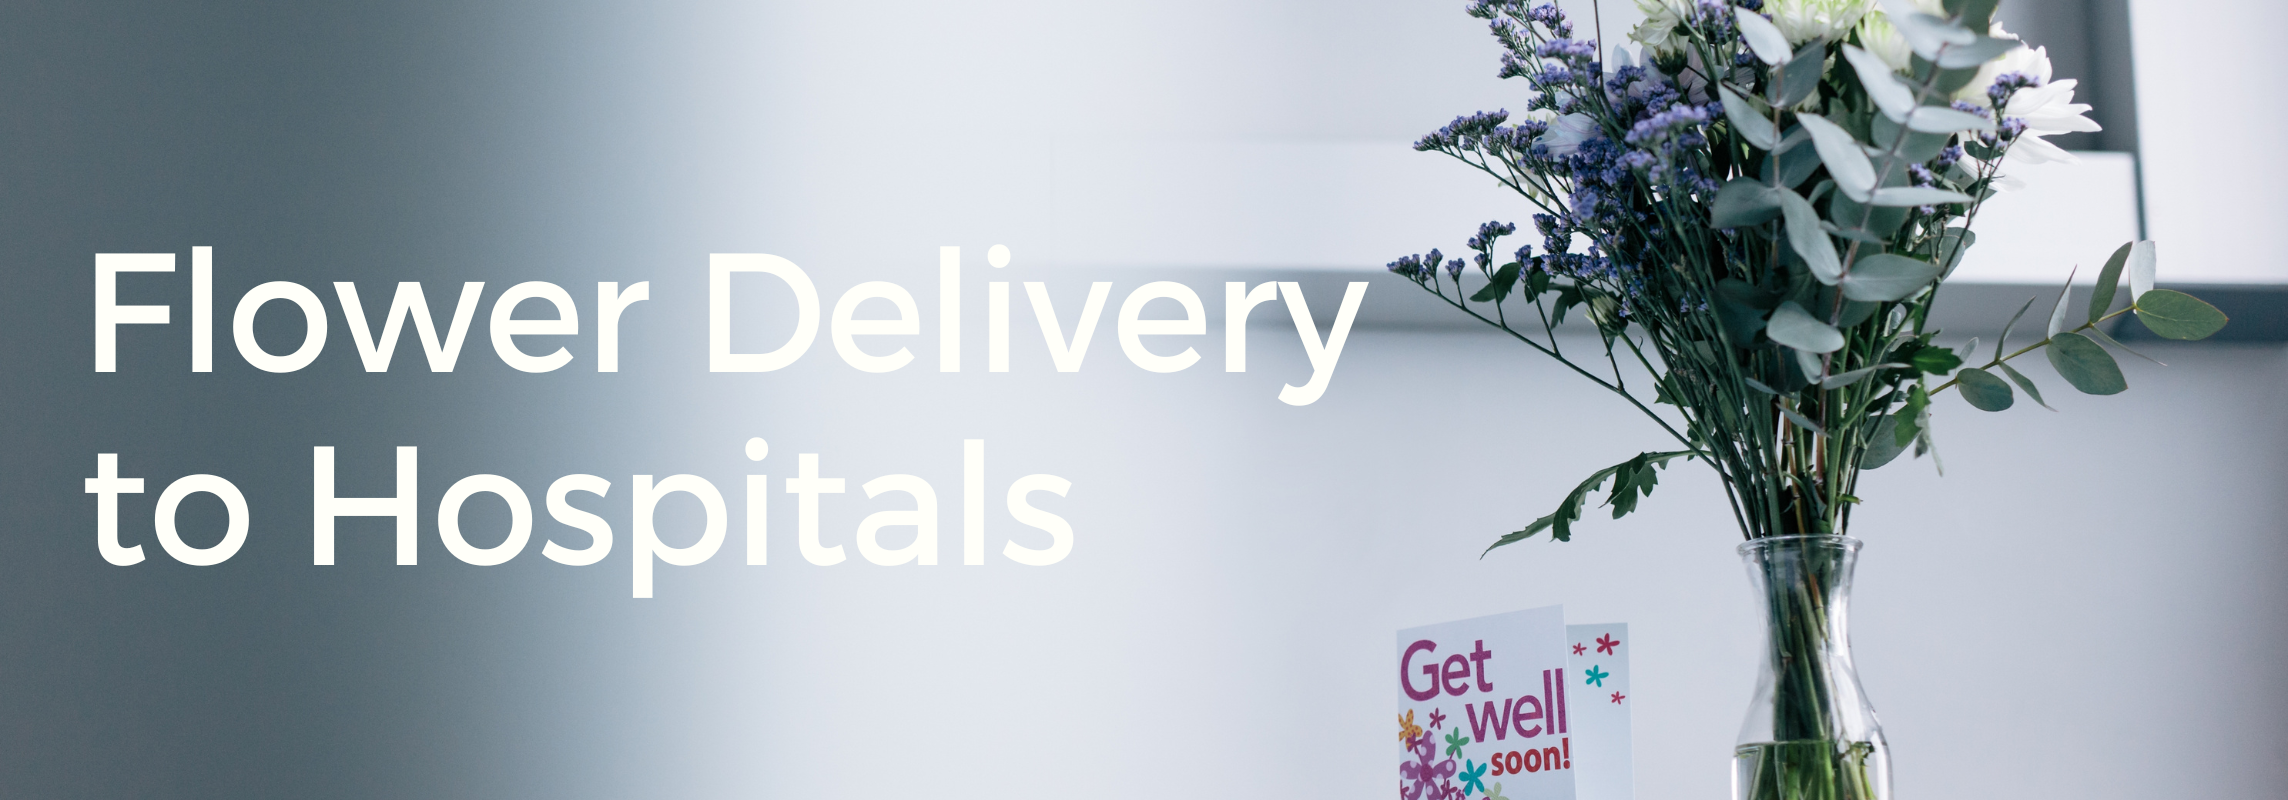 hospital flower delivery